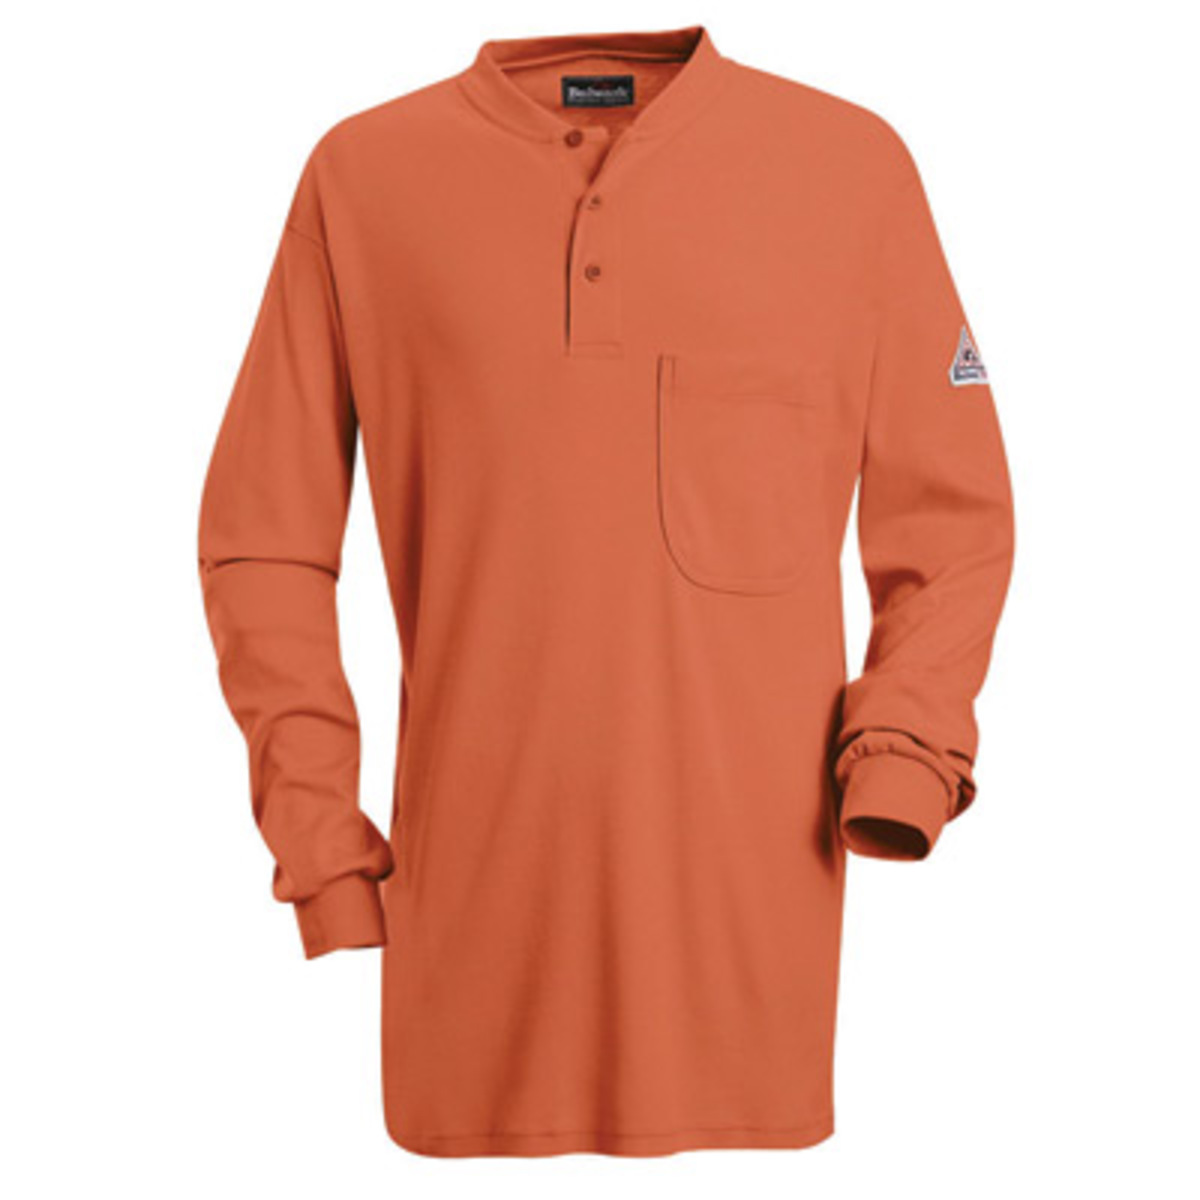 Bulwark® Large Regular Orange EXCEL FR® Interlock FR Cotton Flame Resistant Henley Shirt With Button Front Closure